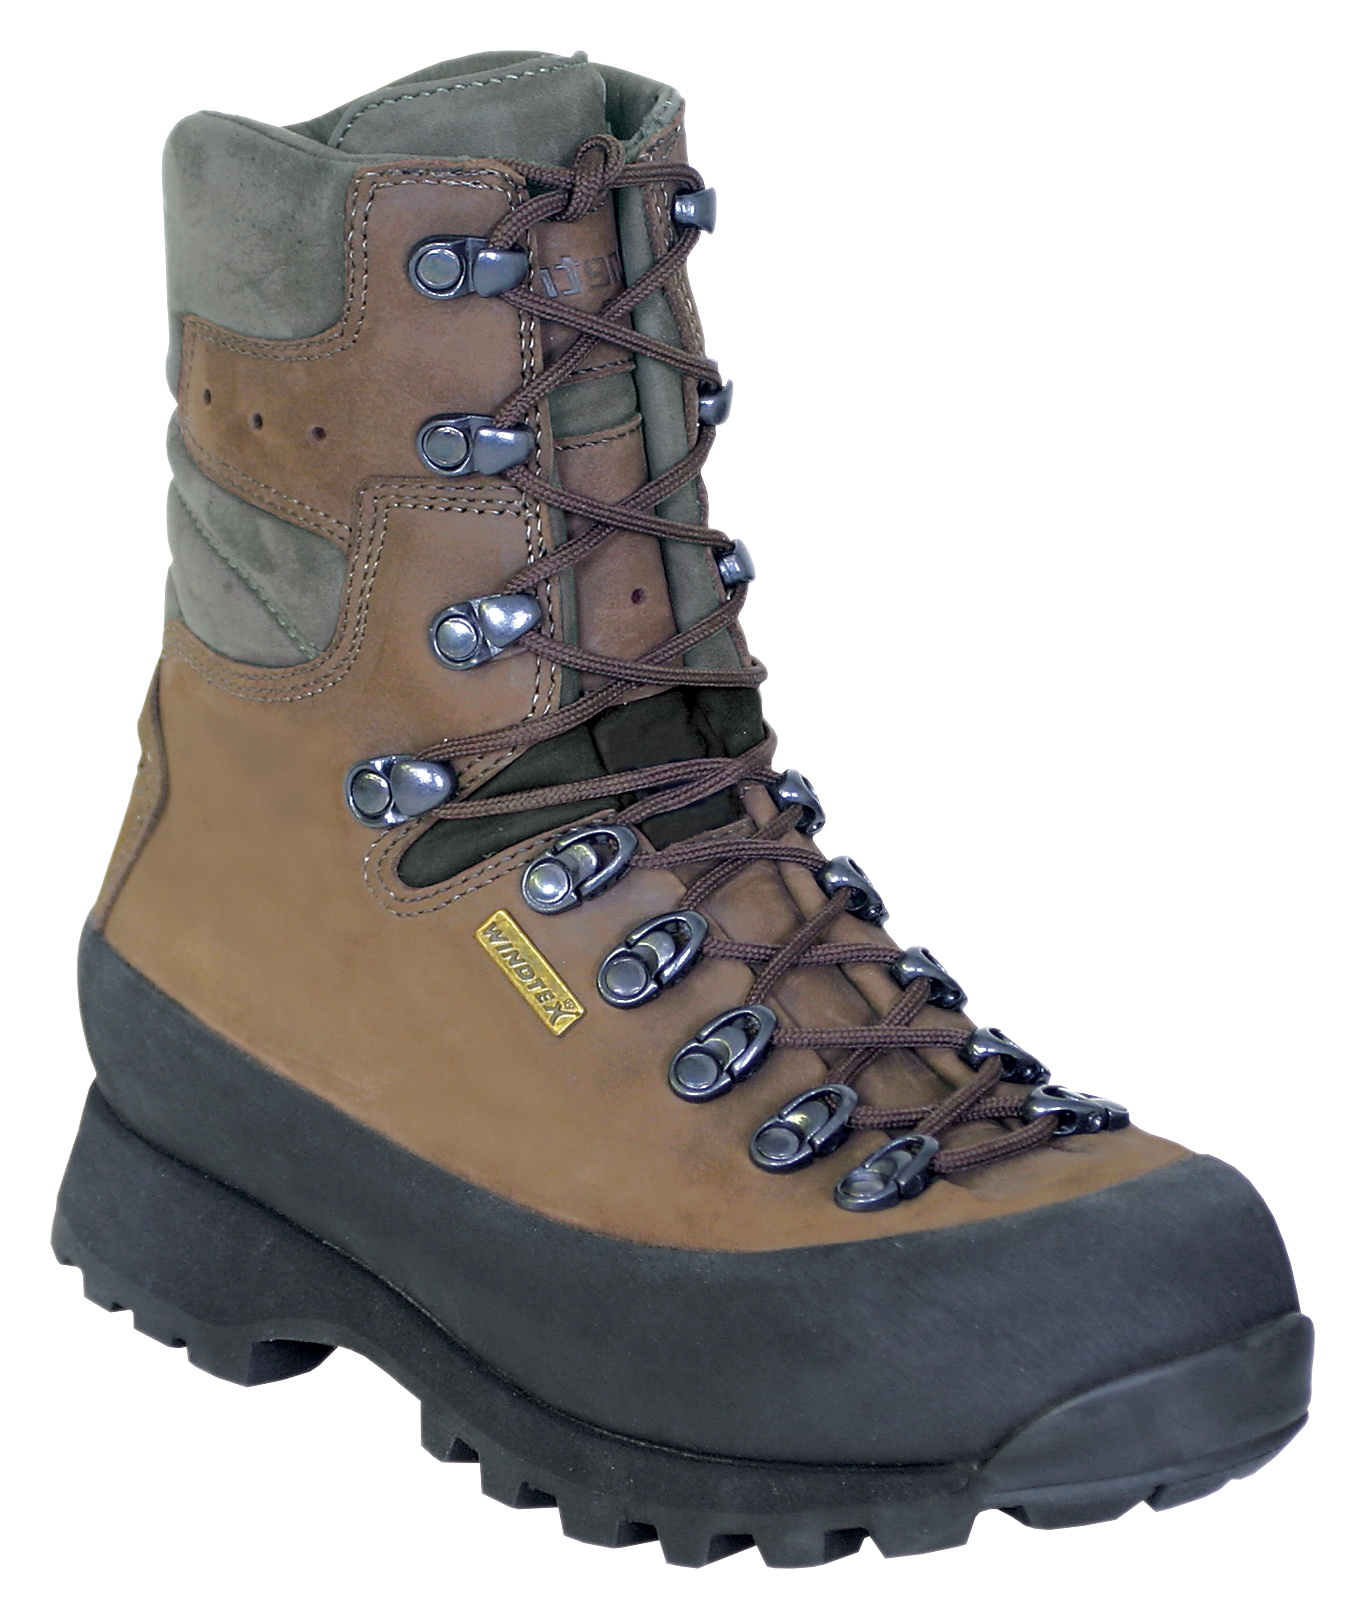 Kenetrek Mountain Extreme Waterproof Hunting Boots for Ladies -   10.5M